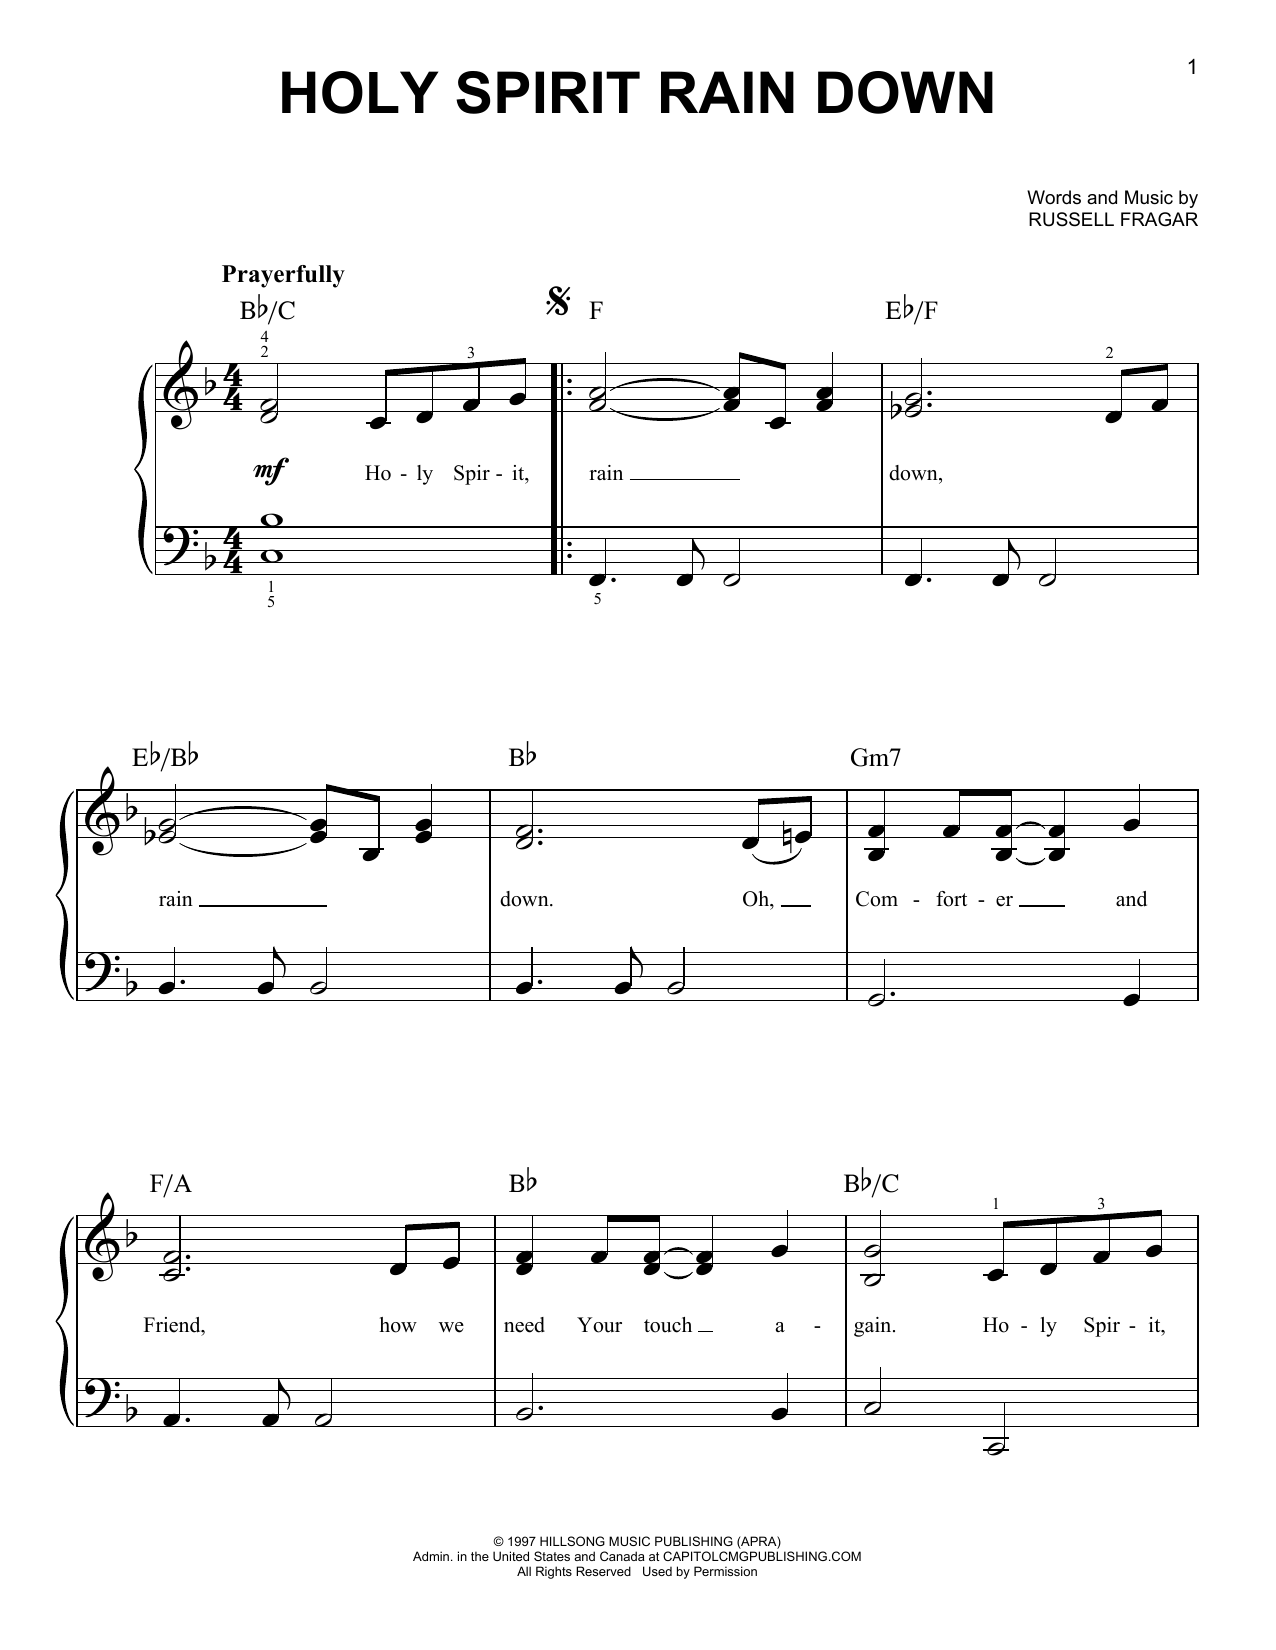 Russell Fragar Holy Spirit Rain Down Sheet Music Notes & Chords for Guitar Chords/Lyrics - Download or Print PDF